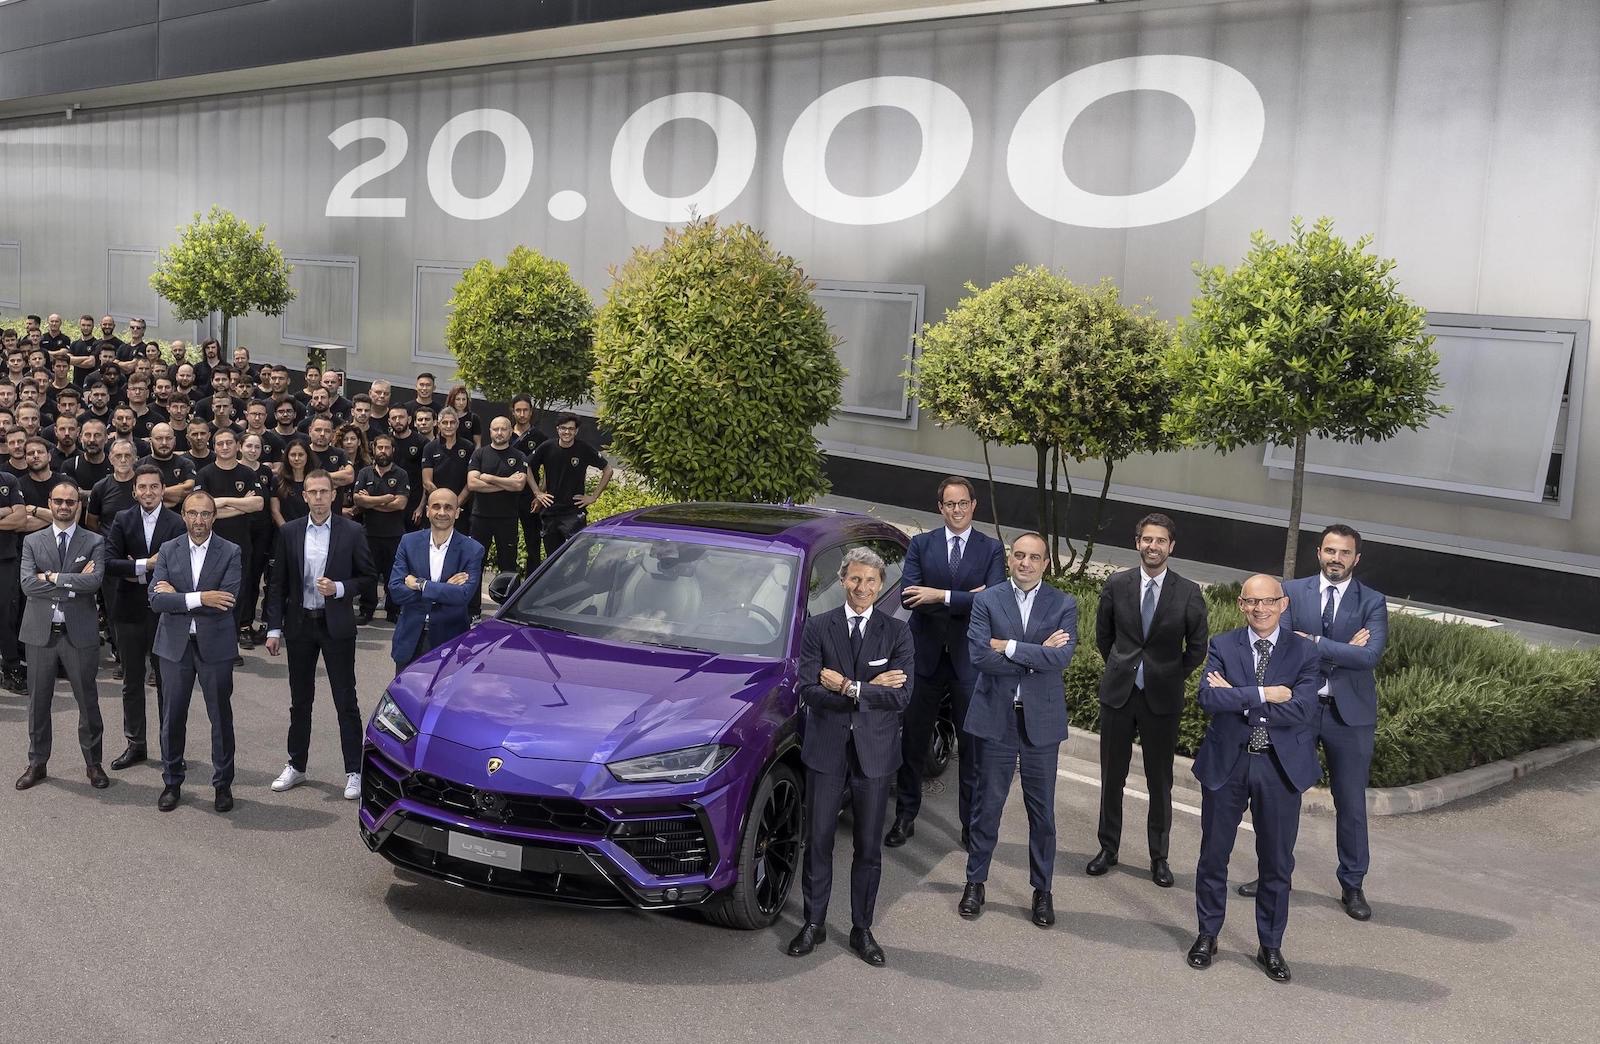 Lamborghini Urus production hits 20,000 units milestone